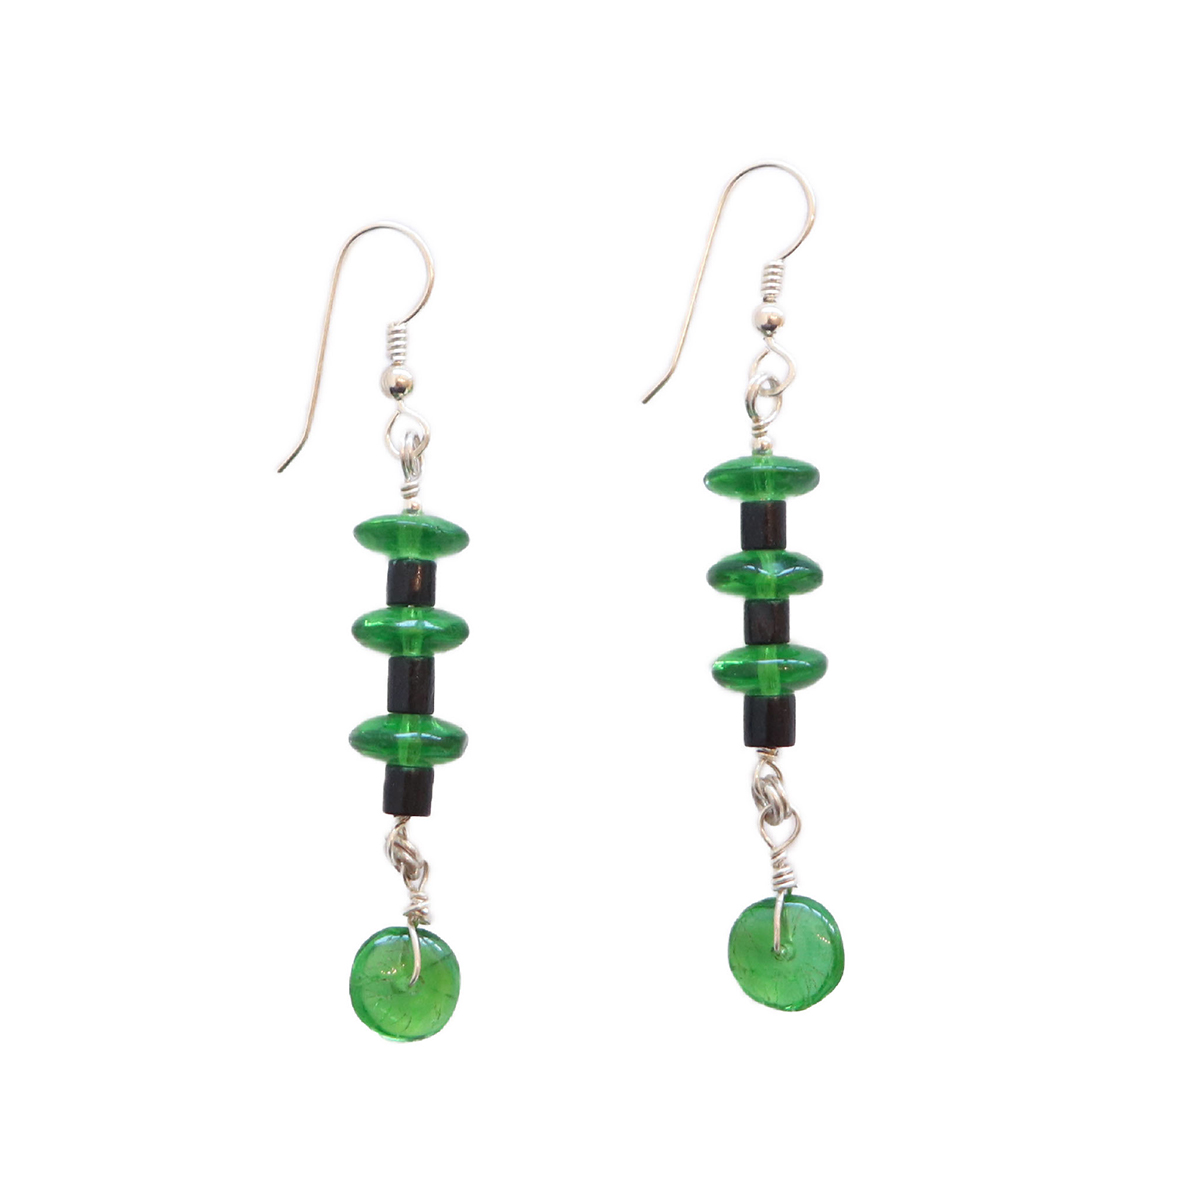 JANET SEWARD - GREEN GLASS TRADEBEAD EARRINGS - SILVER & BEADS